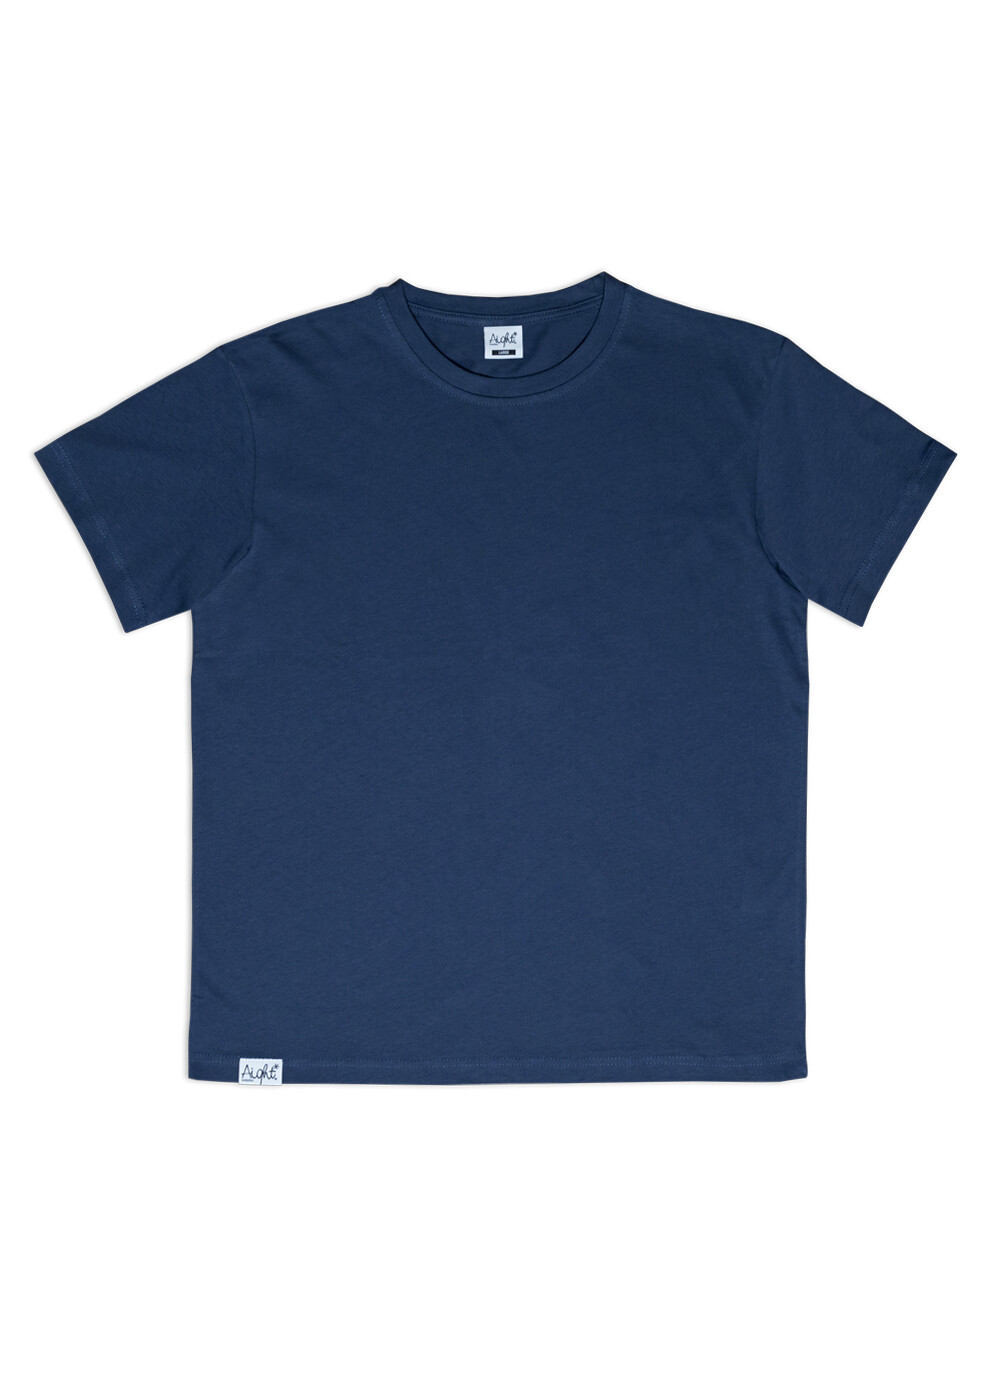 Aight* T-Shirt - "Blank" vintage indigo